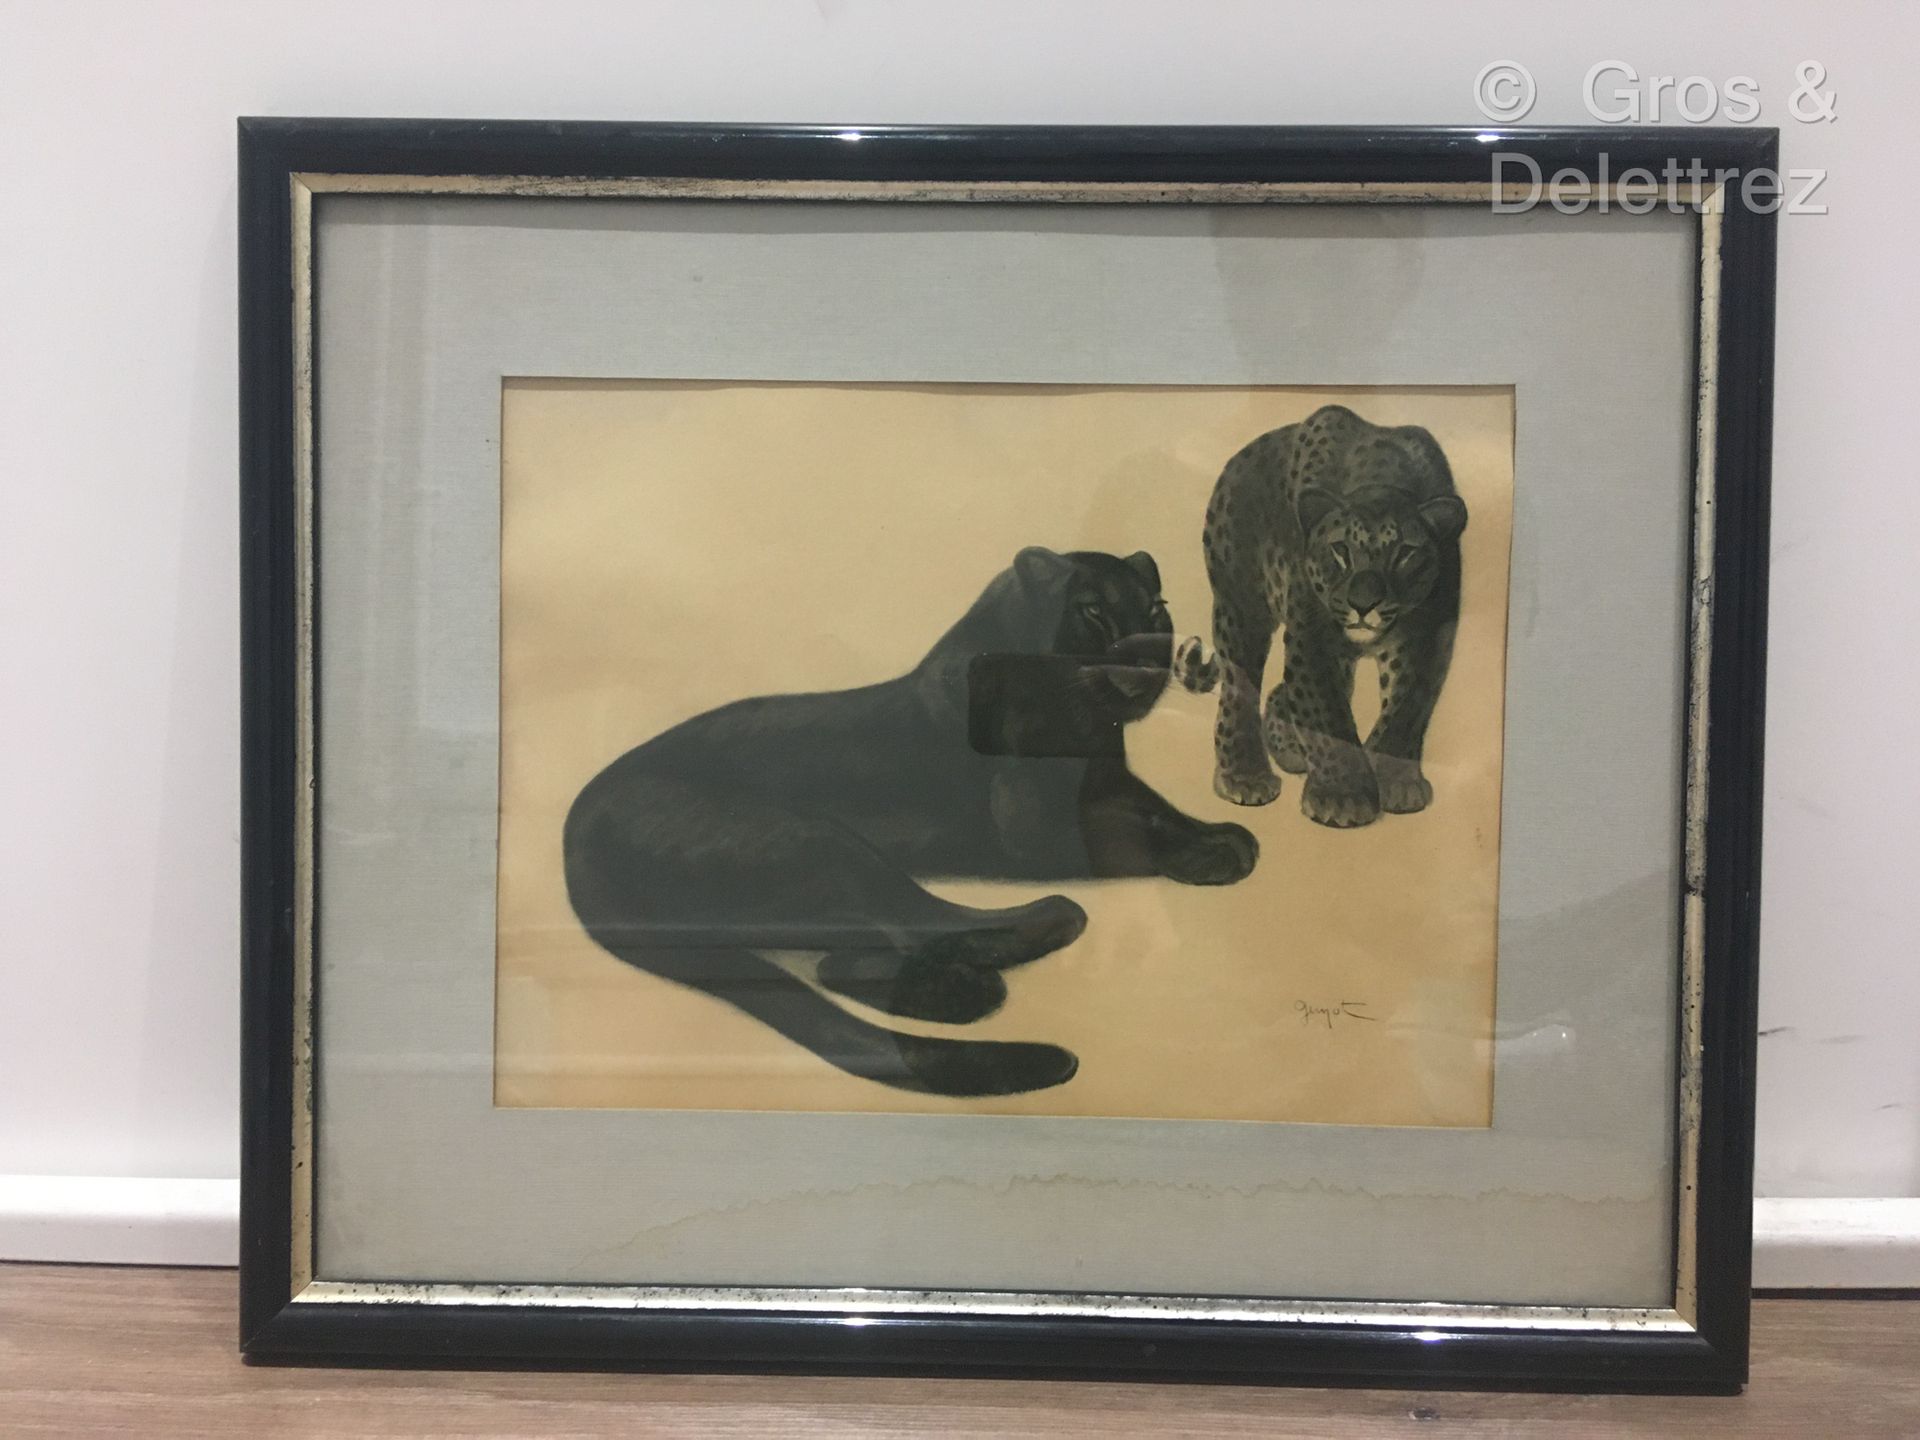 Null (E) 乔治-卢西恩-古约(1885-1973)

黑豹队

黑色的复制品

23 x 31,5 cm